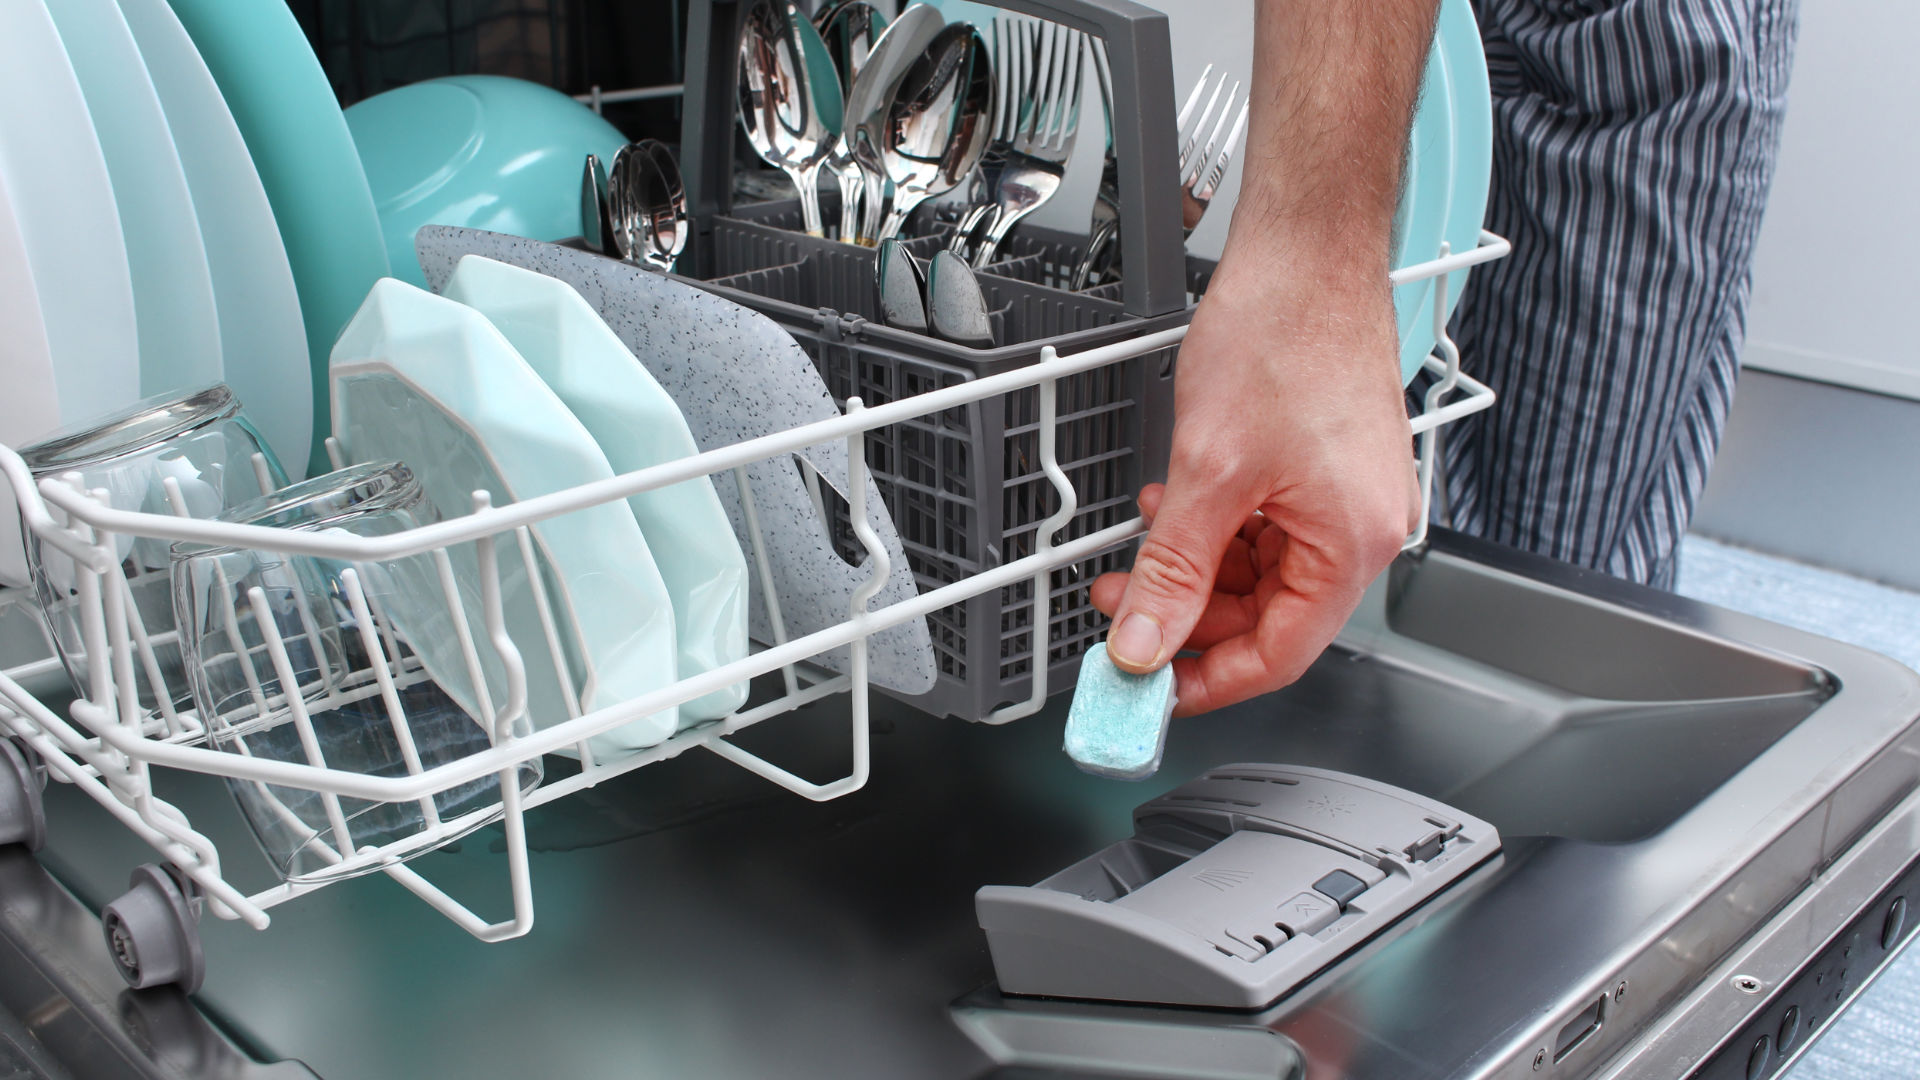 Featured image for “Bosch Dishwasher Error Code E15”